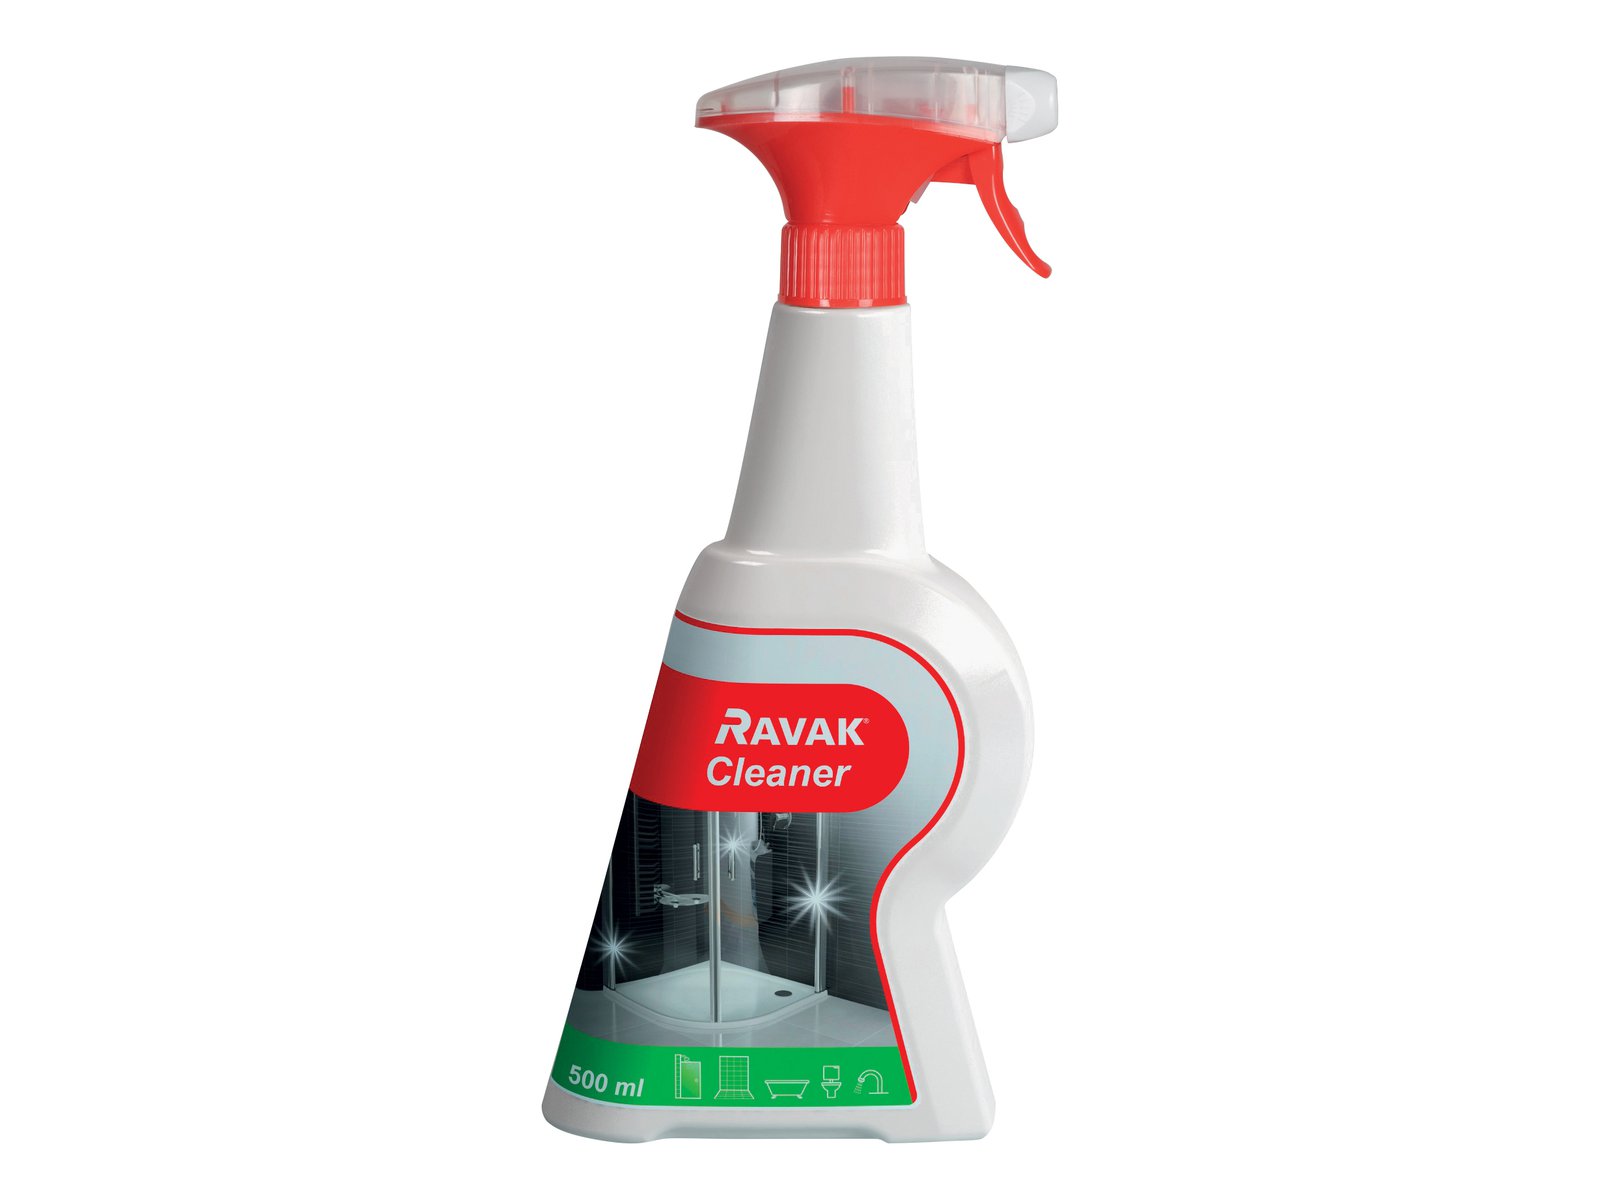 RAVAK CLEANER (500 ml)